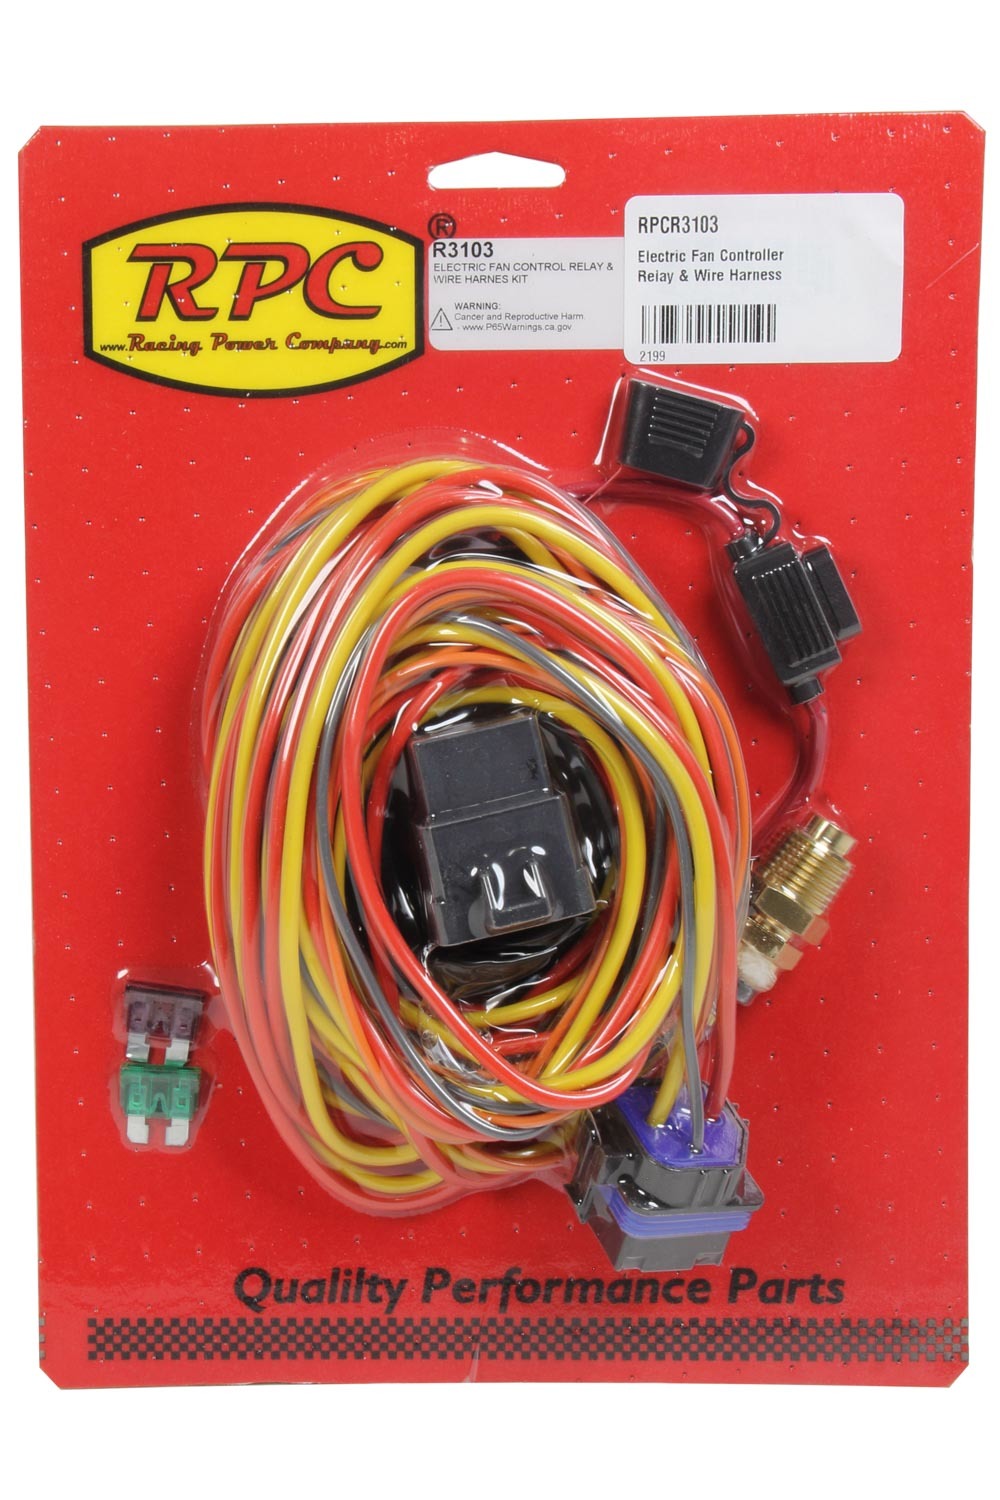 Racing Power Company R3103 Fan Controller, 185 Degree F On, 165 Degree F Off, 3/8 in NPT Thread Temperature Sensor, Bushing / Harness / Relay, Universal, Kit